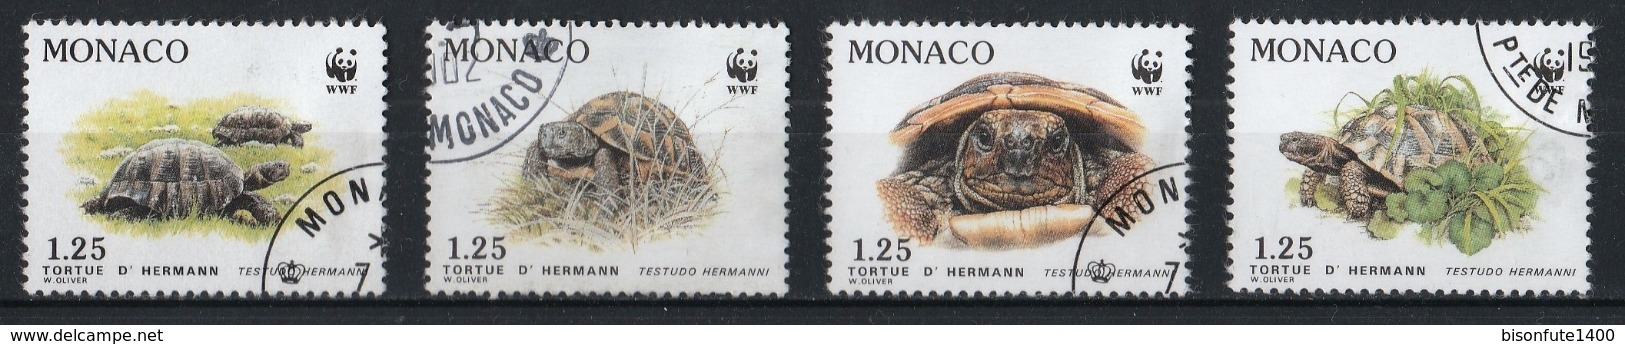 Monaco 1991 : Timbres Yvert & Tellier N° 1805 à 1808. - Usados